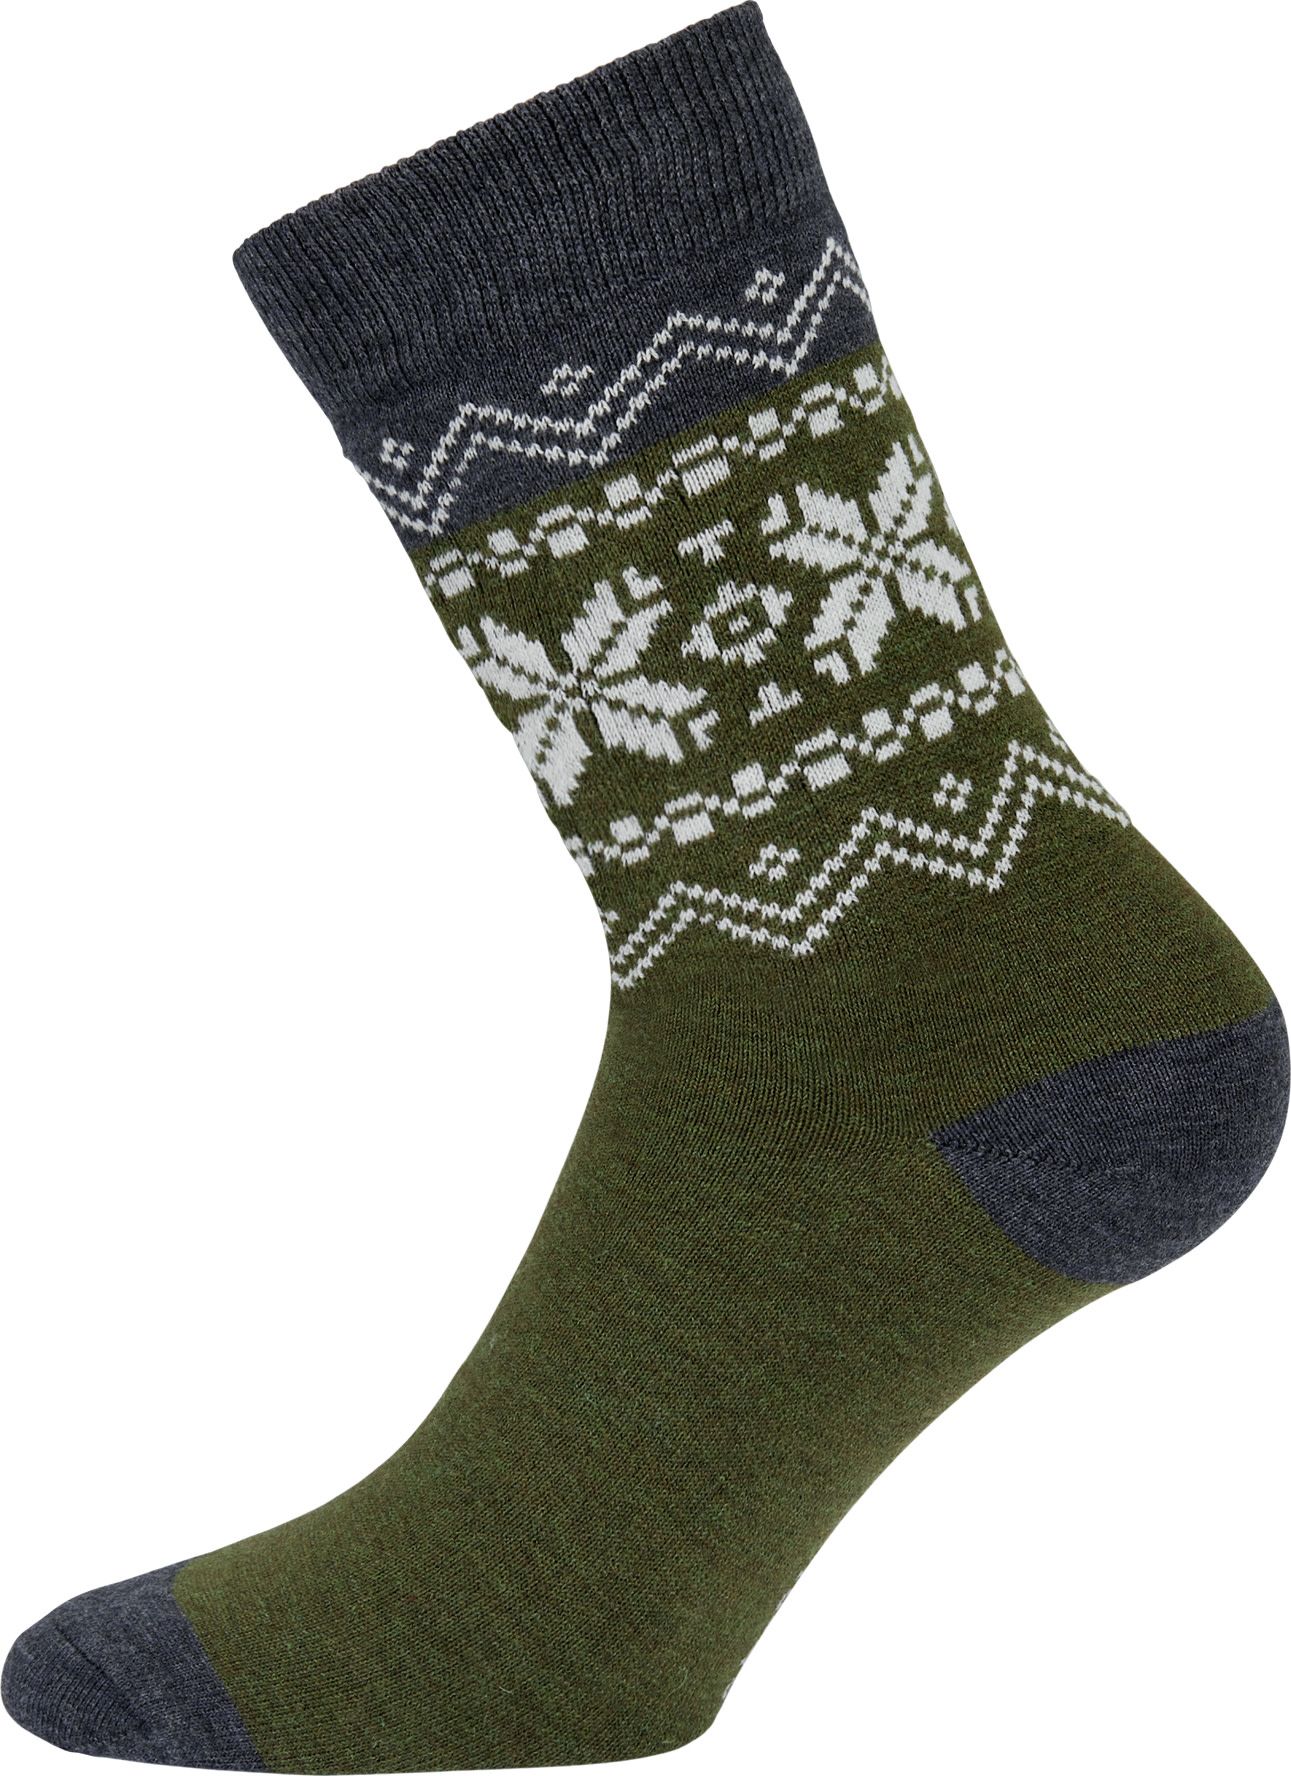 Heritage Merino Socks Green/Grey/White